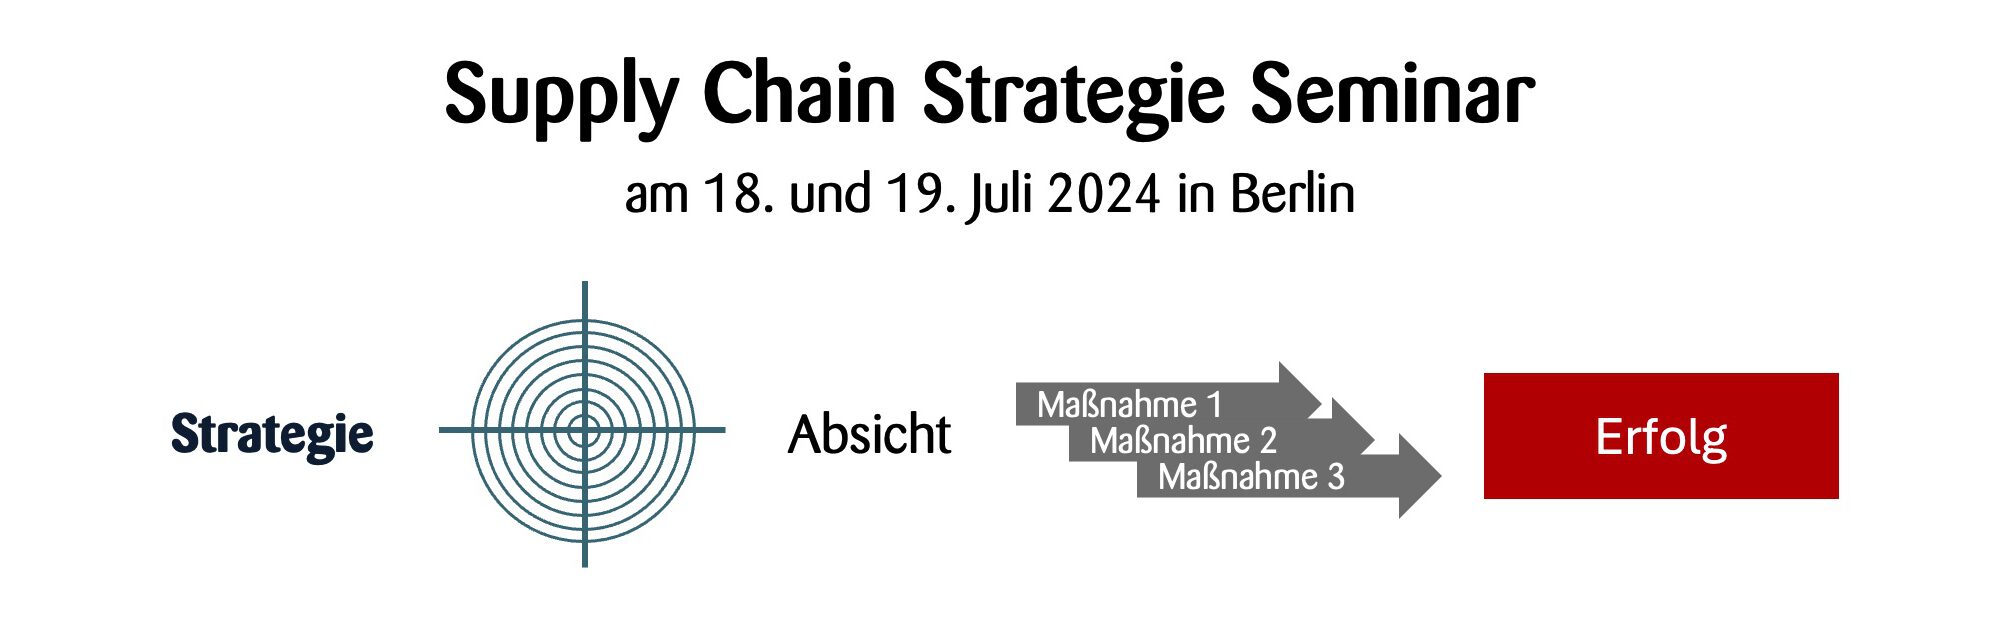 Supply Chain Strategie Seminar am 18./19.7.24 in Berlin